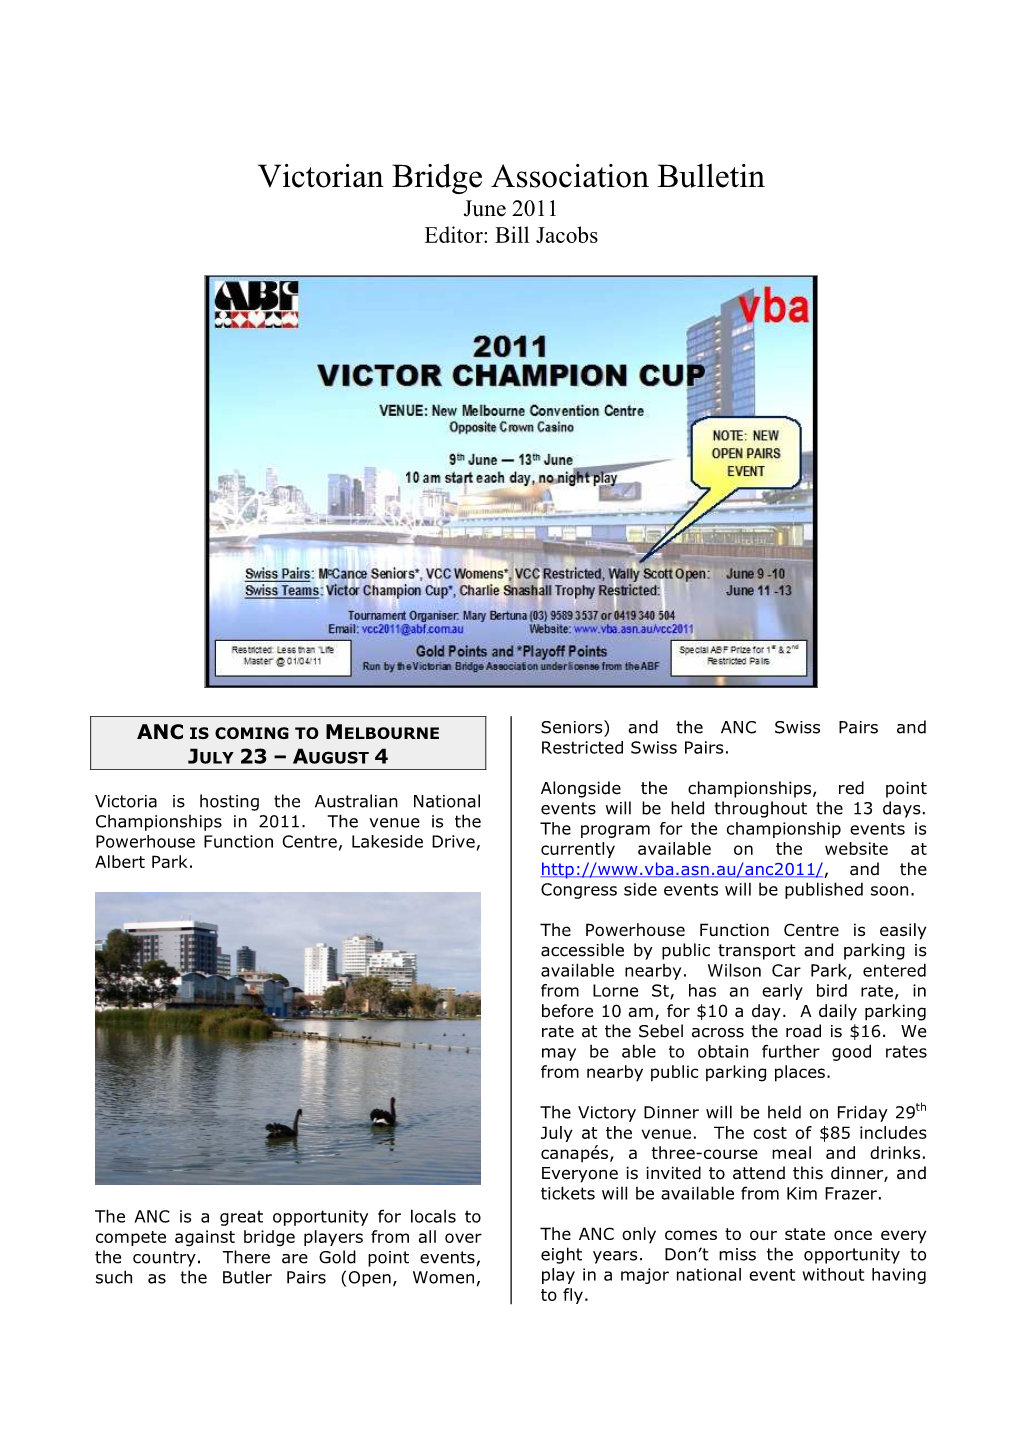 Victorian Bridge Association Bulletin June 2011 Editor: Bill Jacobs